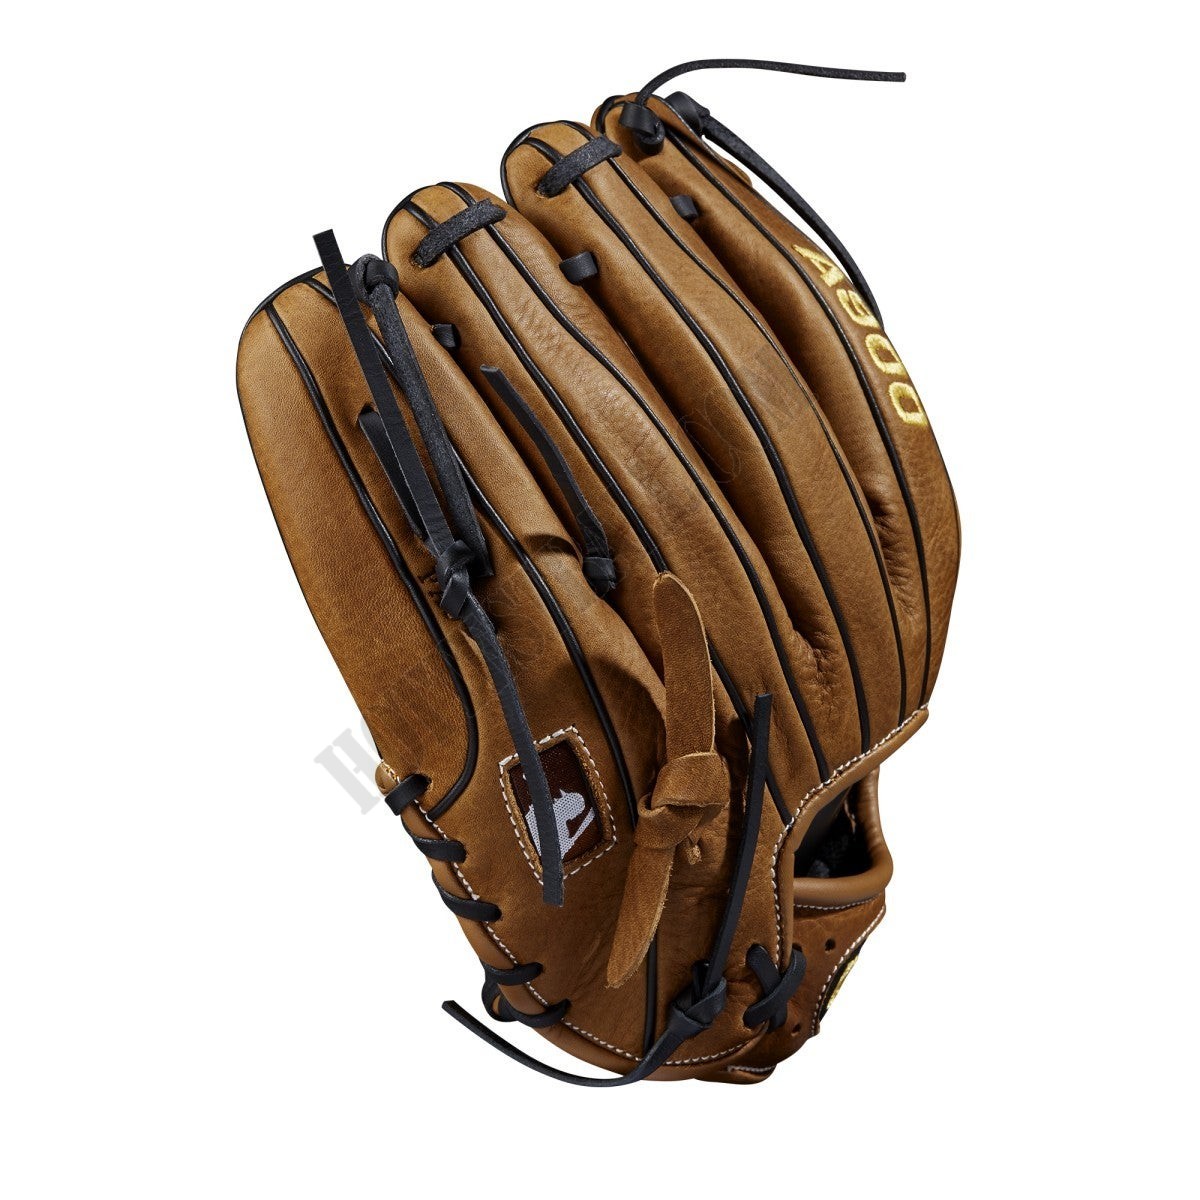 2020 A900 11.5" Baseball Glove ● Wilson Promotions - -4